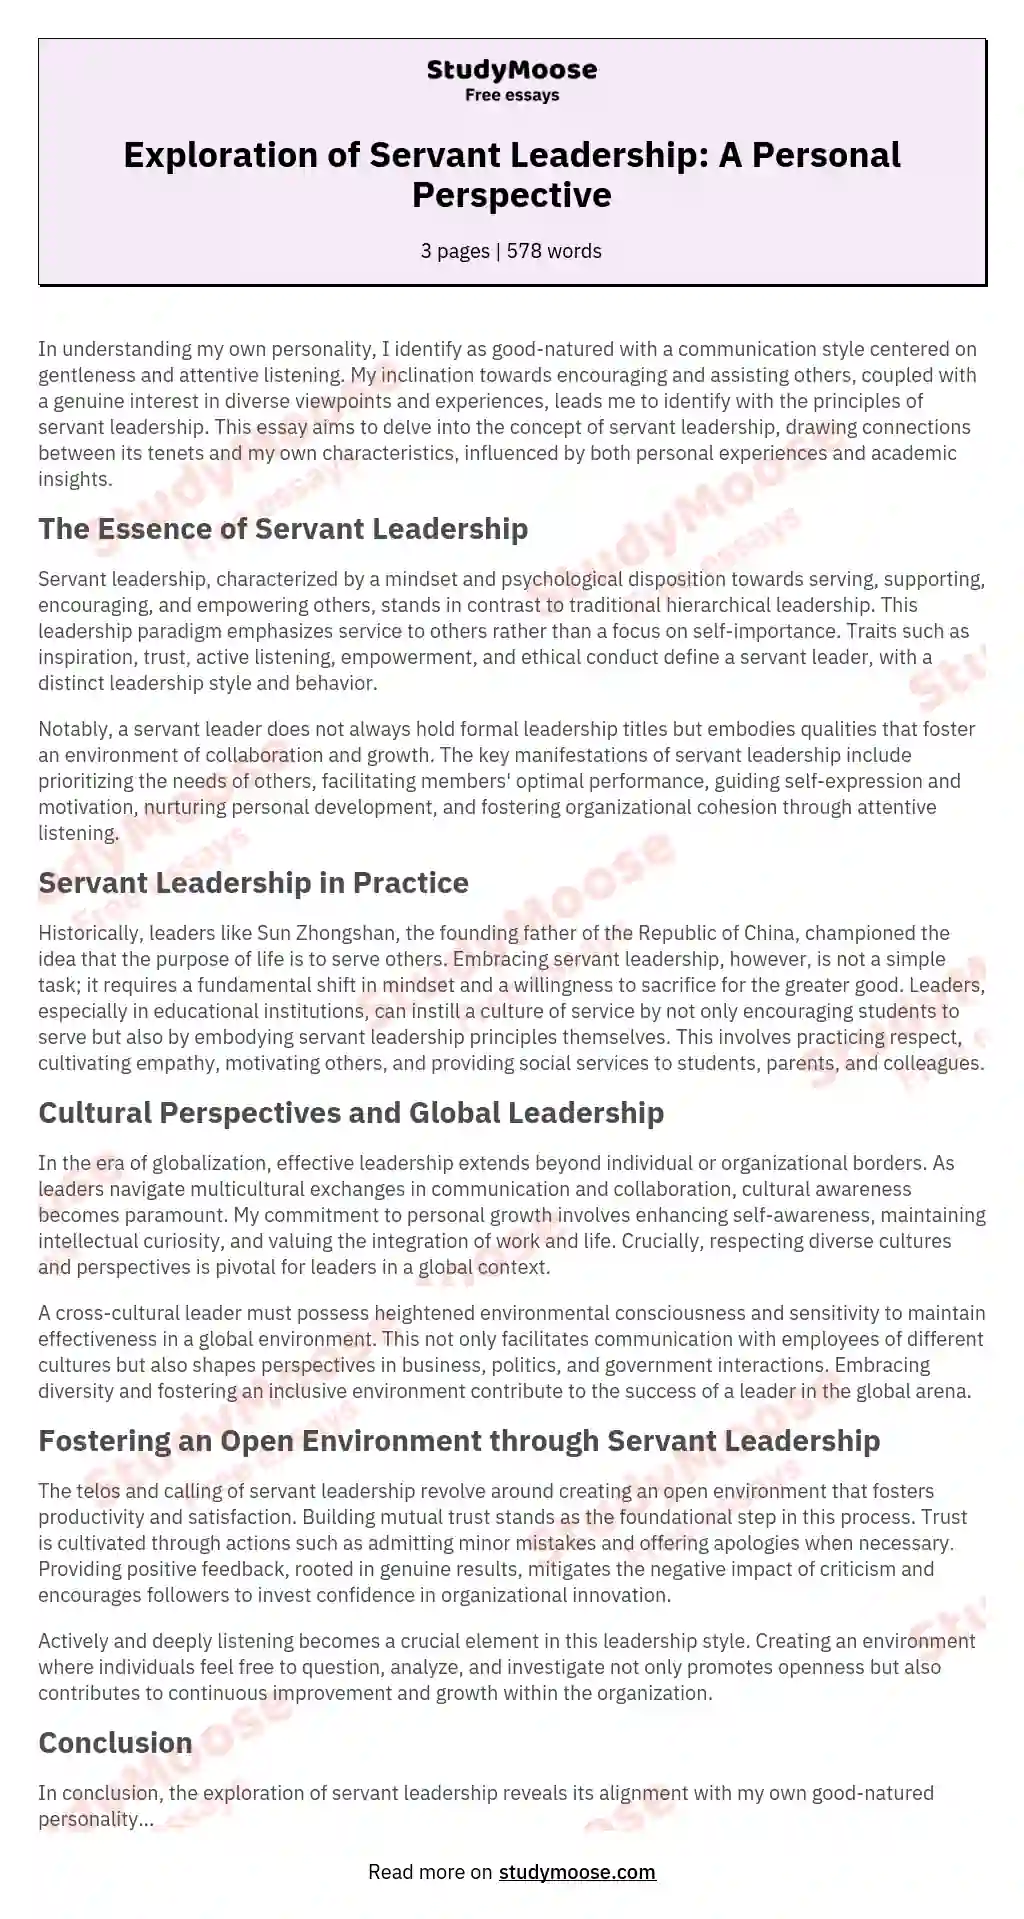 Exploration of Servant Leadership: A Personal Perspective essay